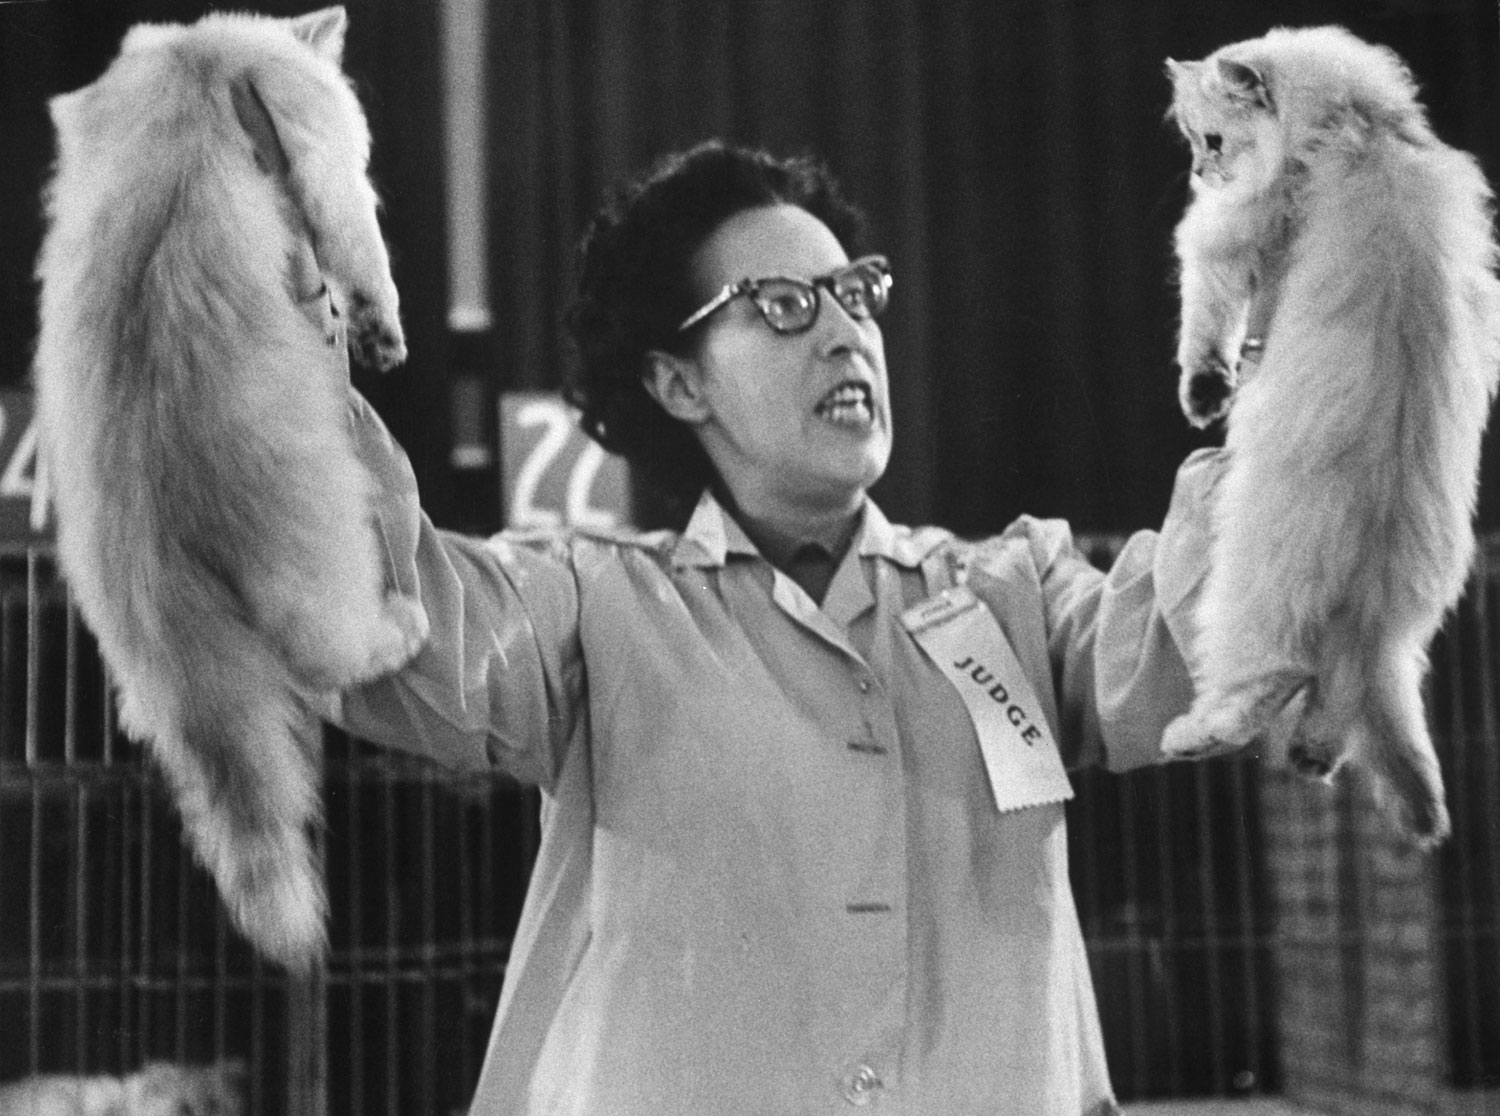 Cat show, Los Angeles, Calif., 1952.